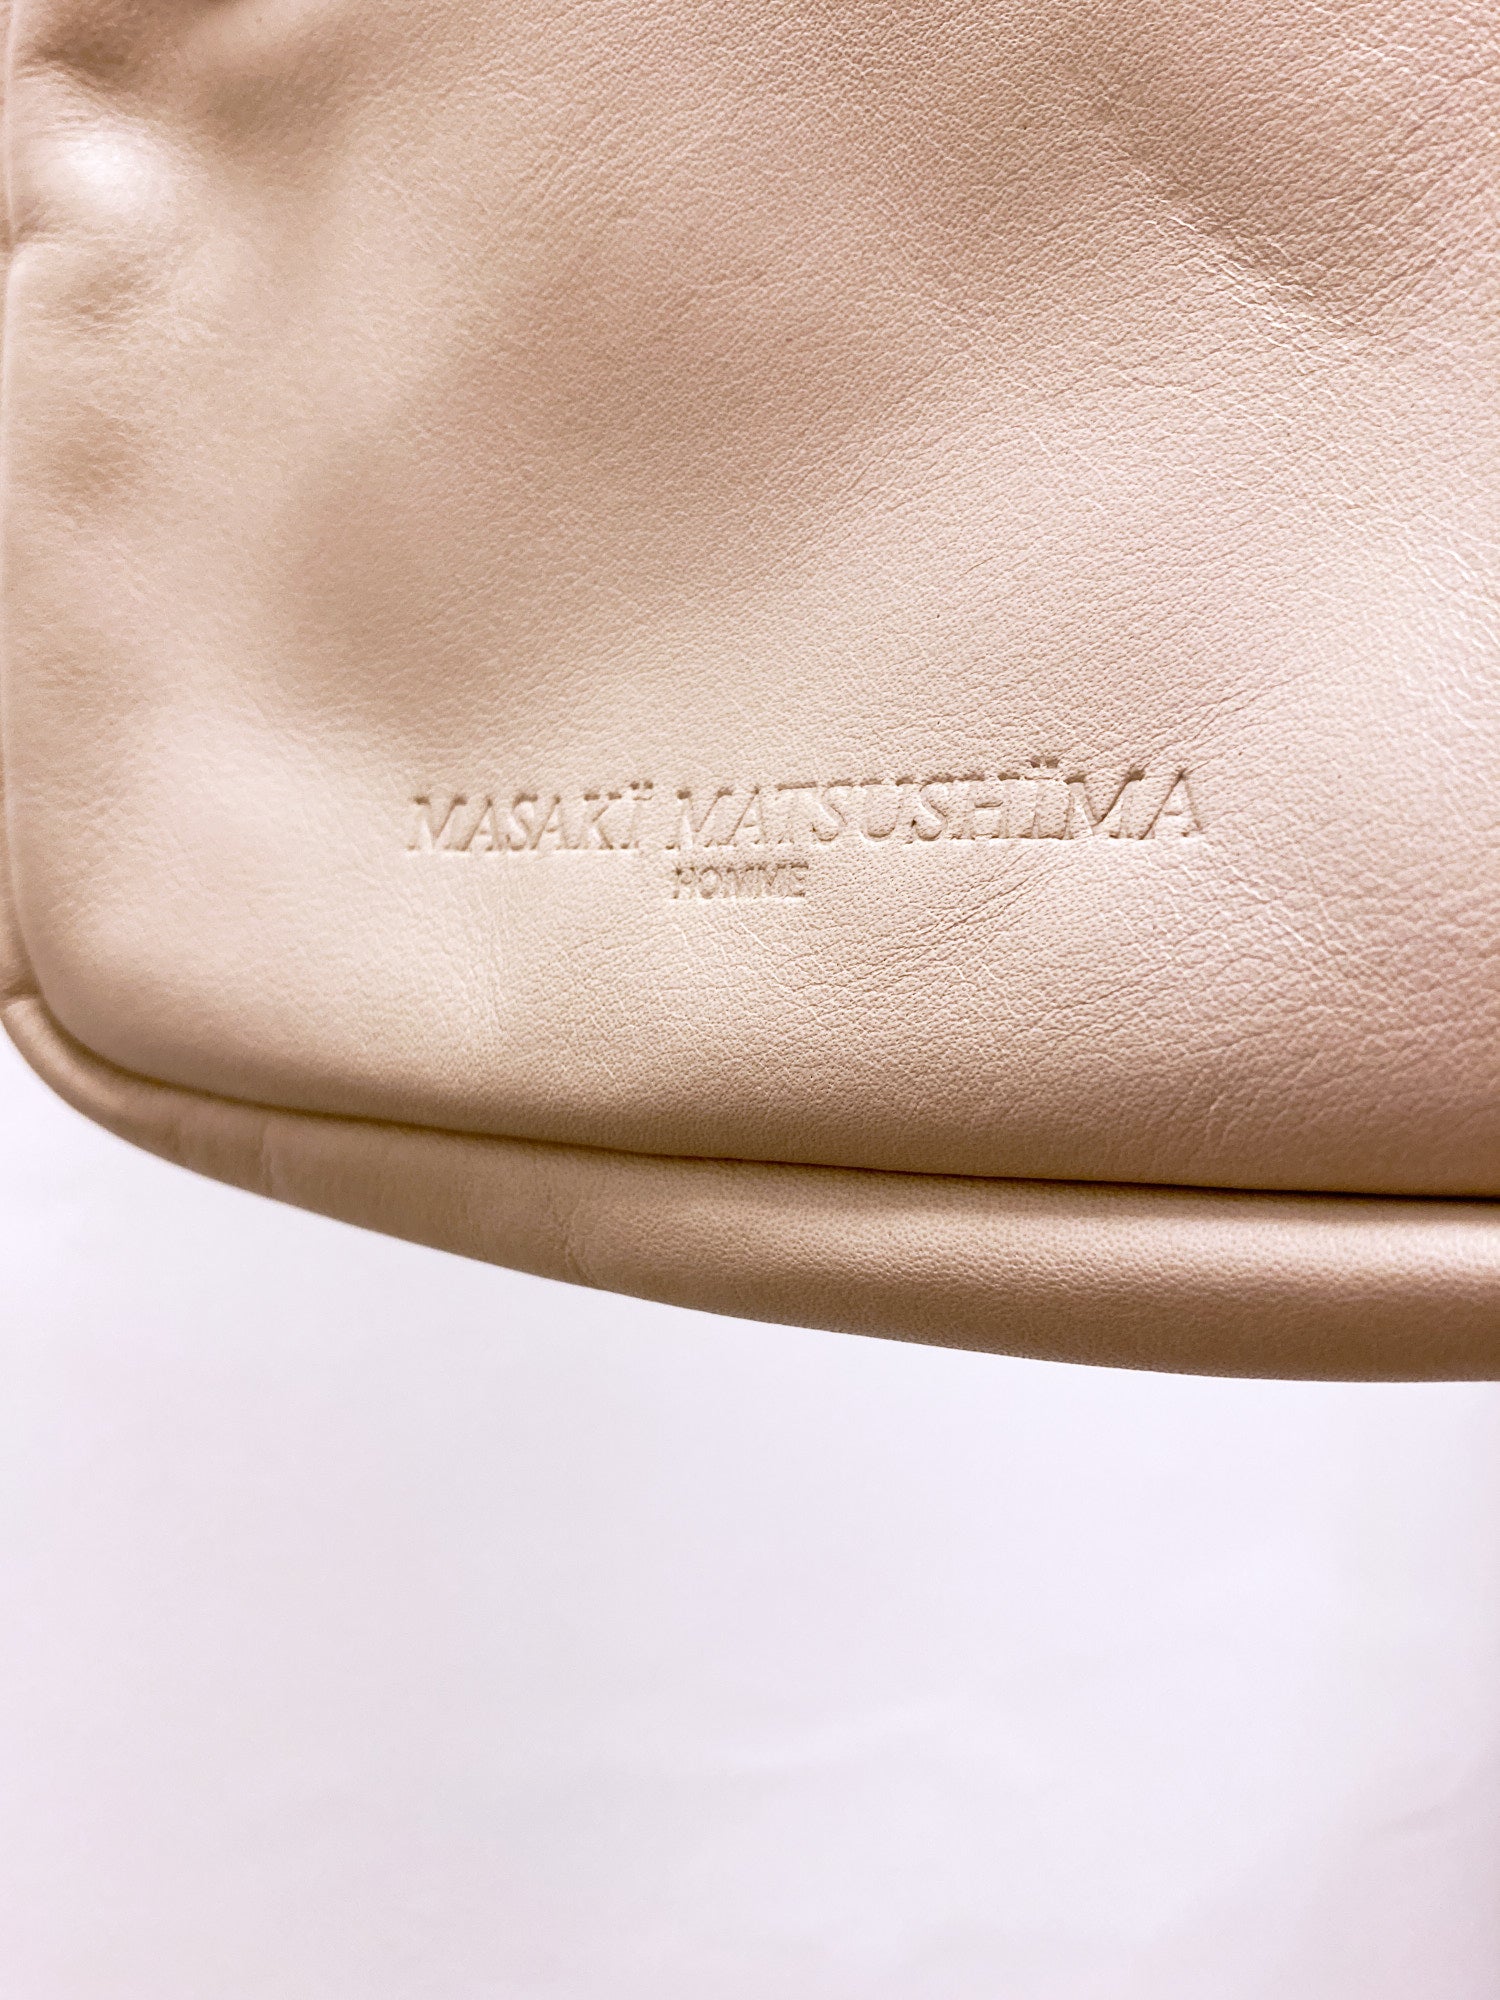 Masaki Matsushima Homme cream leather shoulder bag